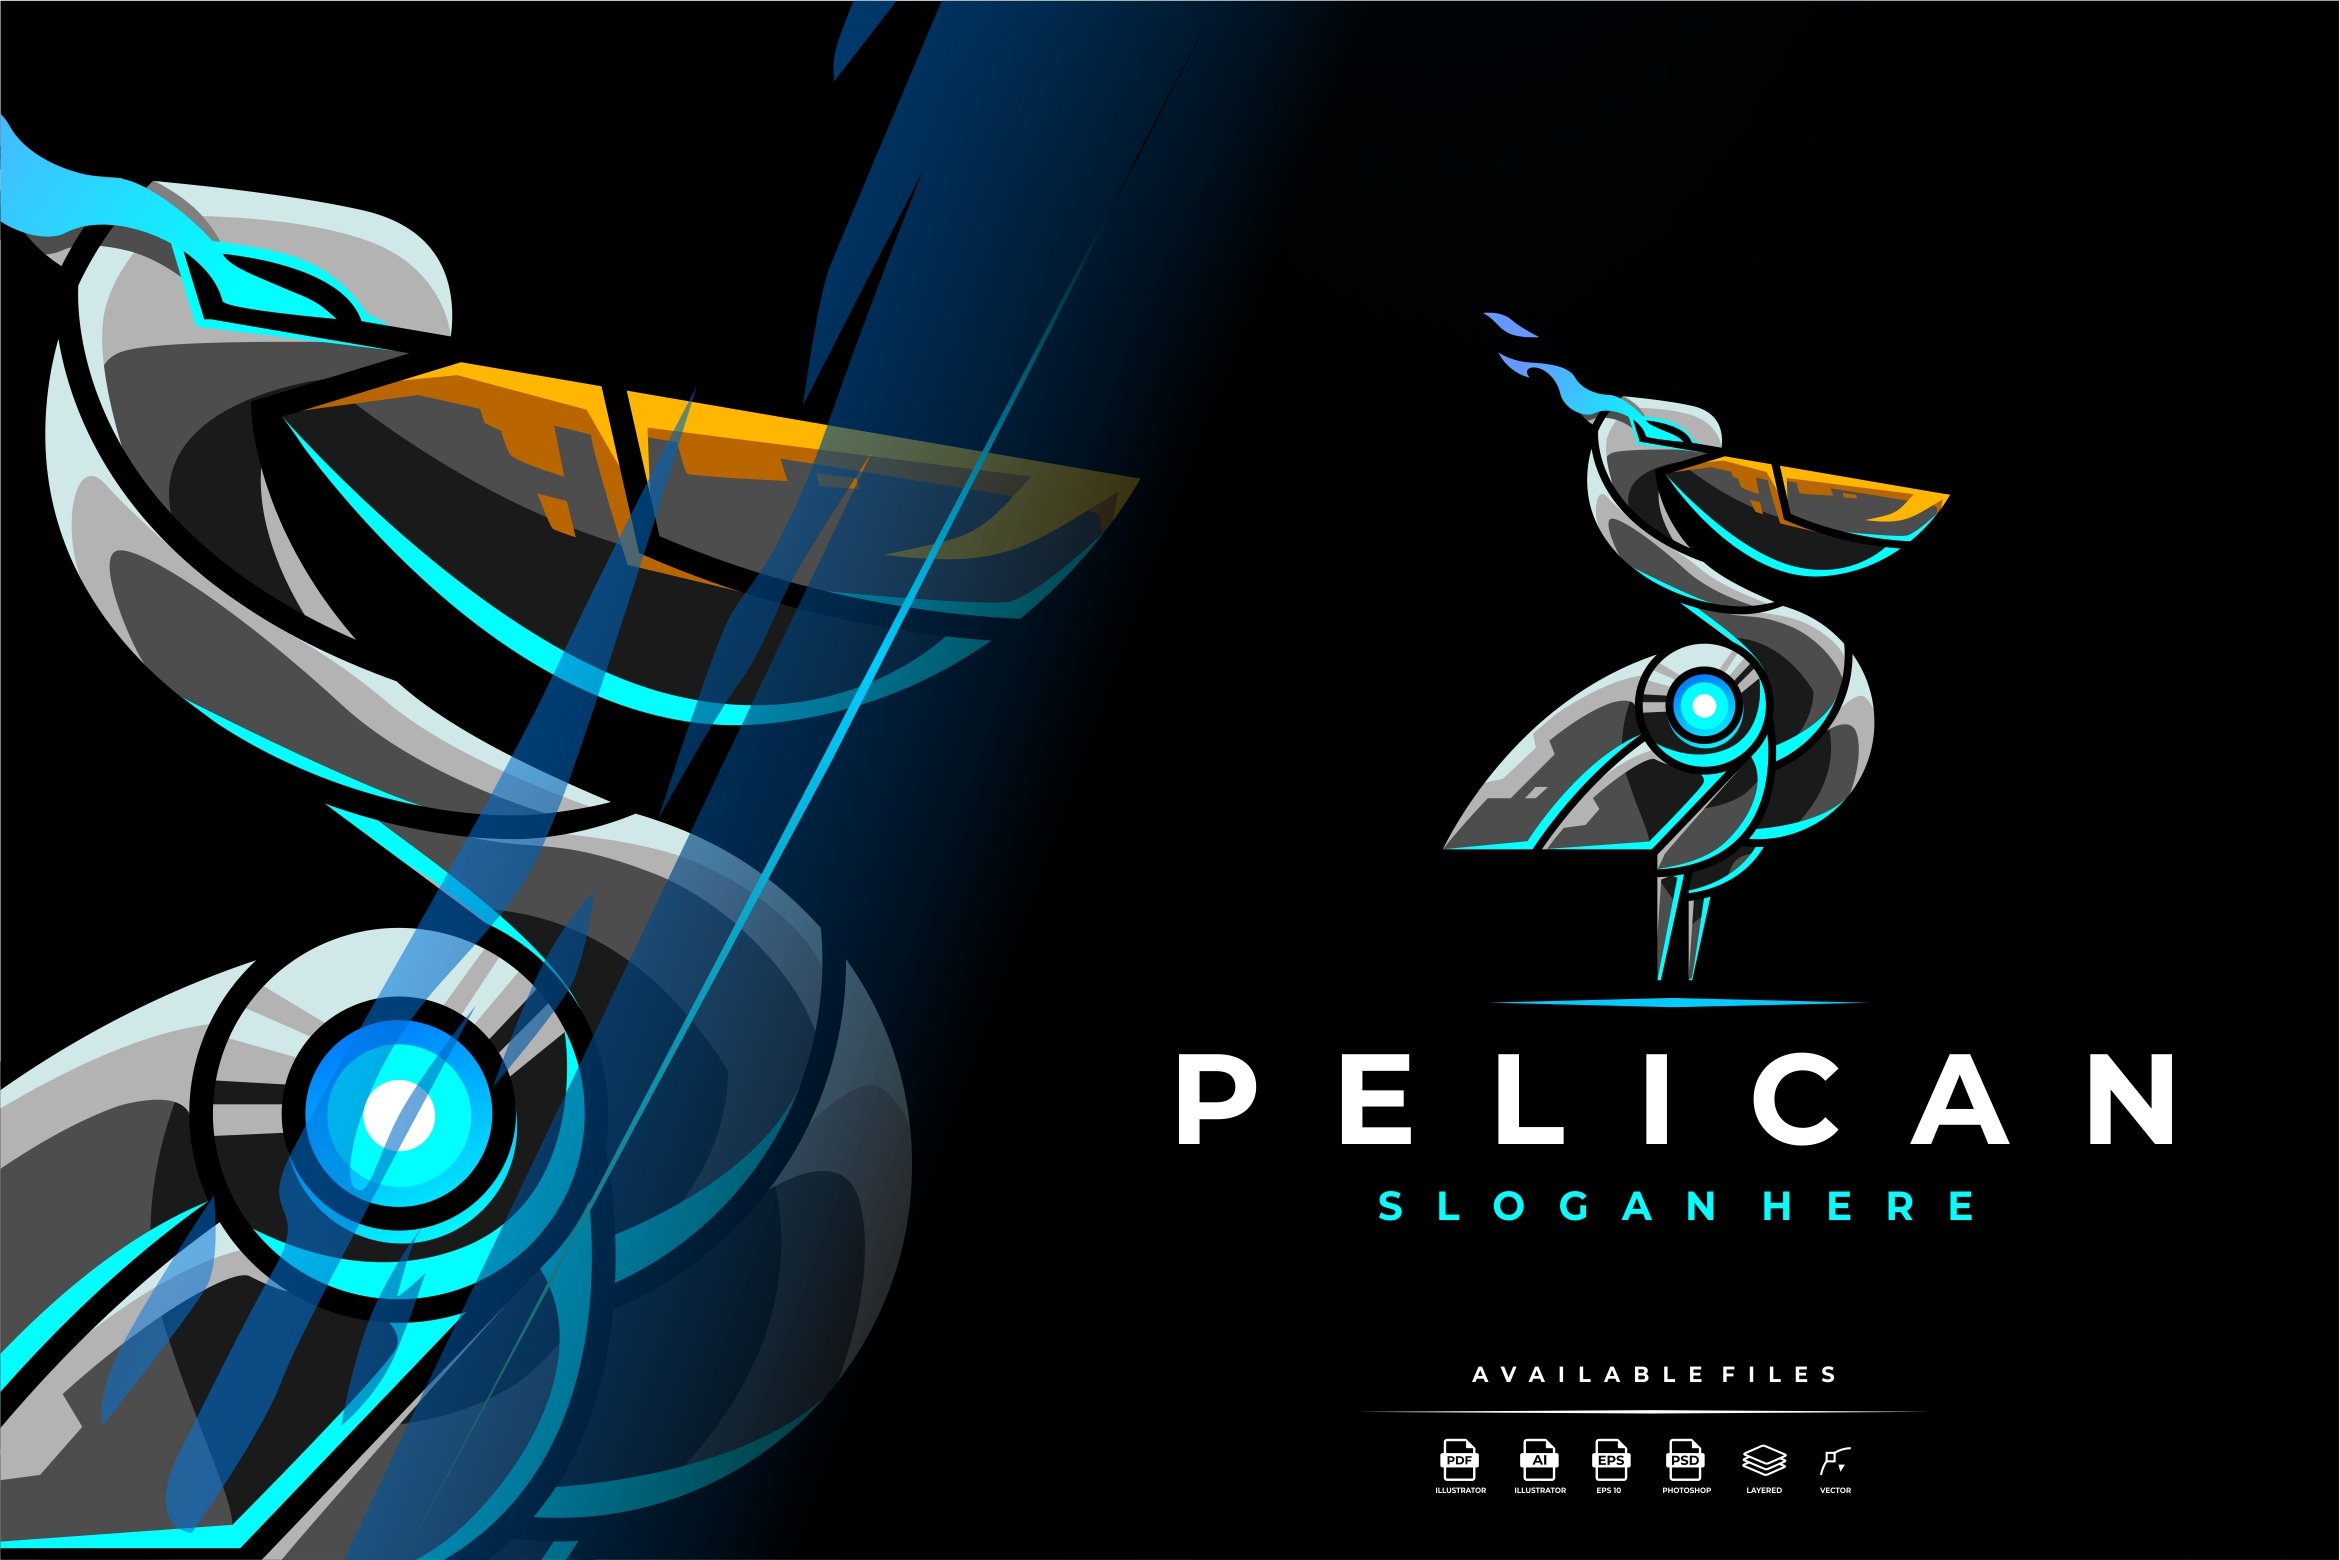 Unique Robotic Pelican Mascot Logo cover image.